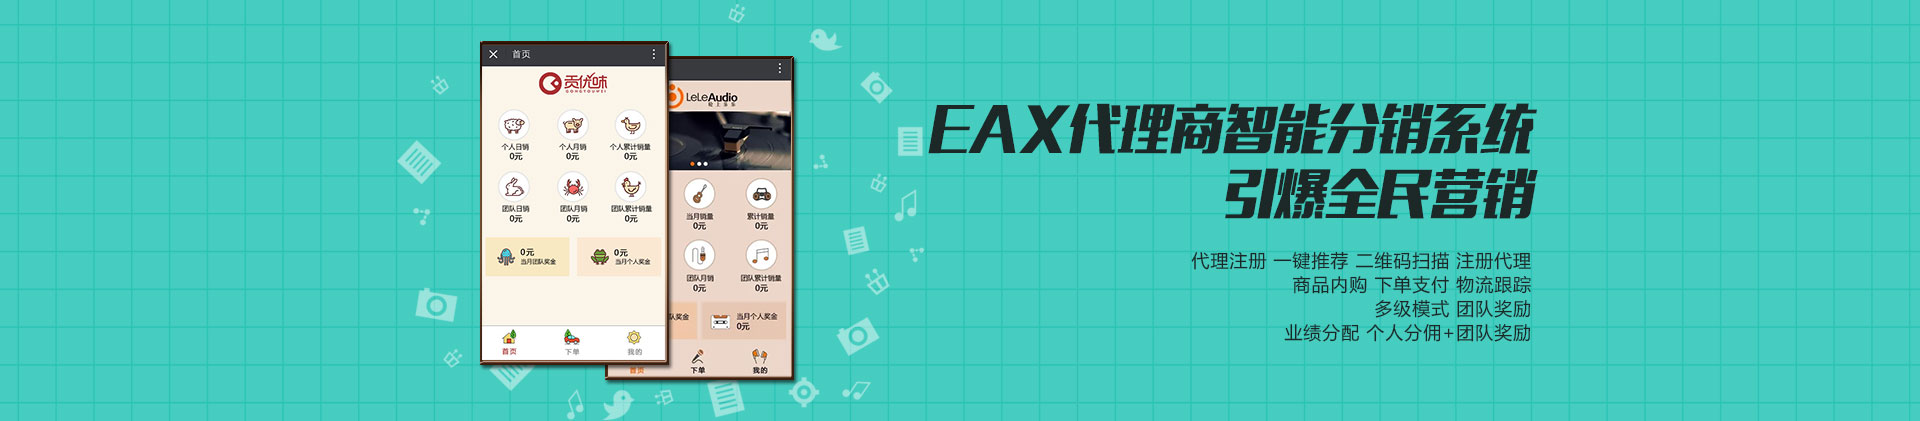 EAX代理商智能分销系统 - 自贡app开发 - 自贡微信开发 - 自贡小程序